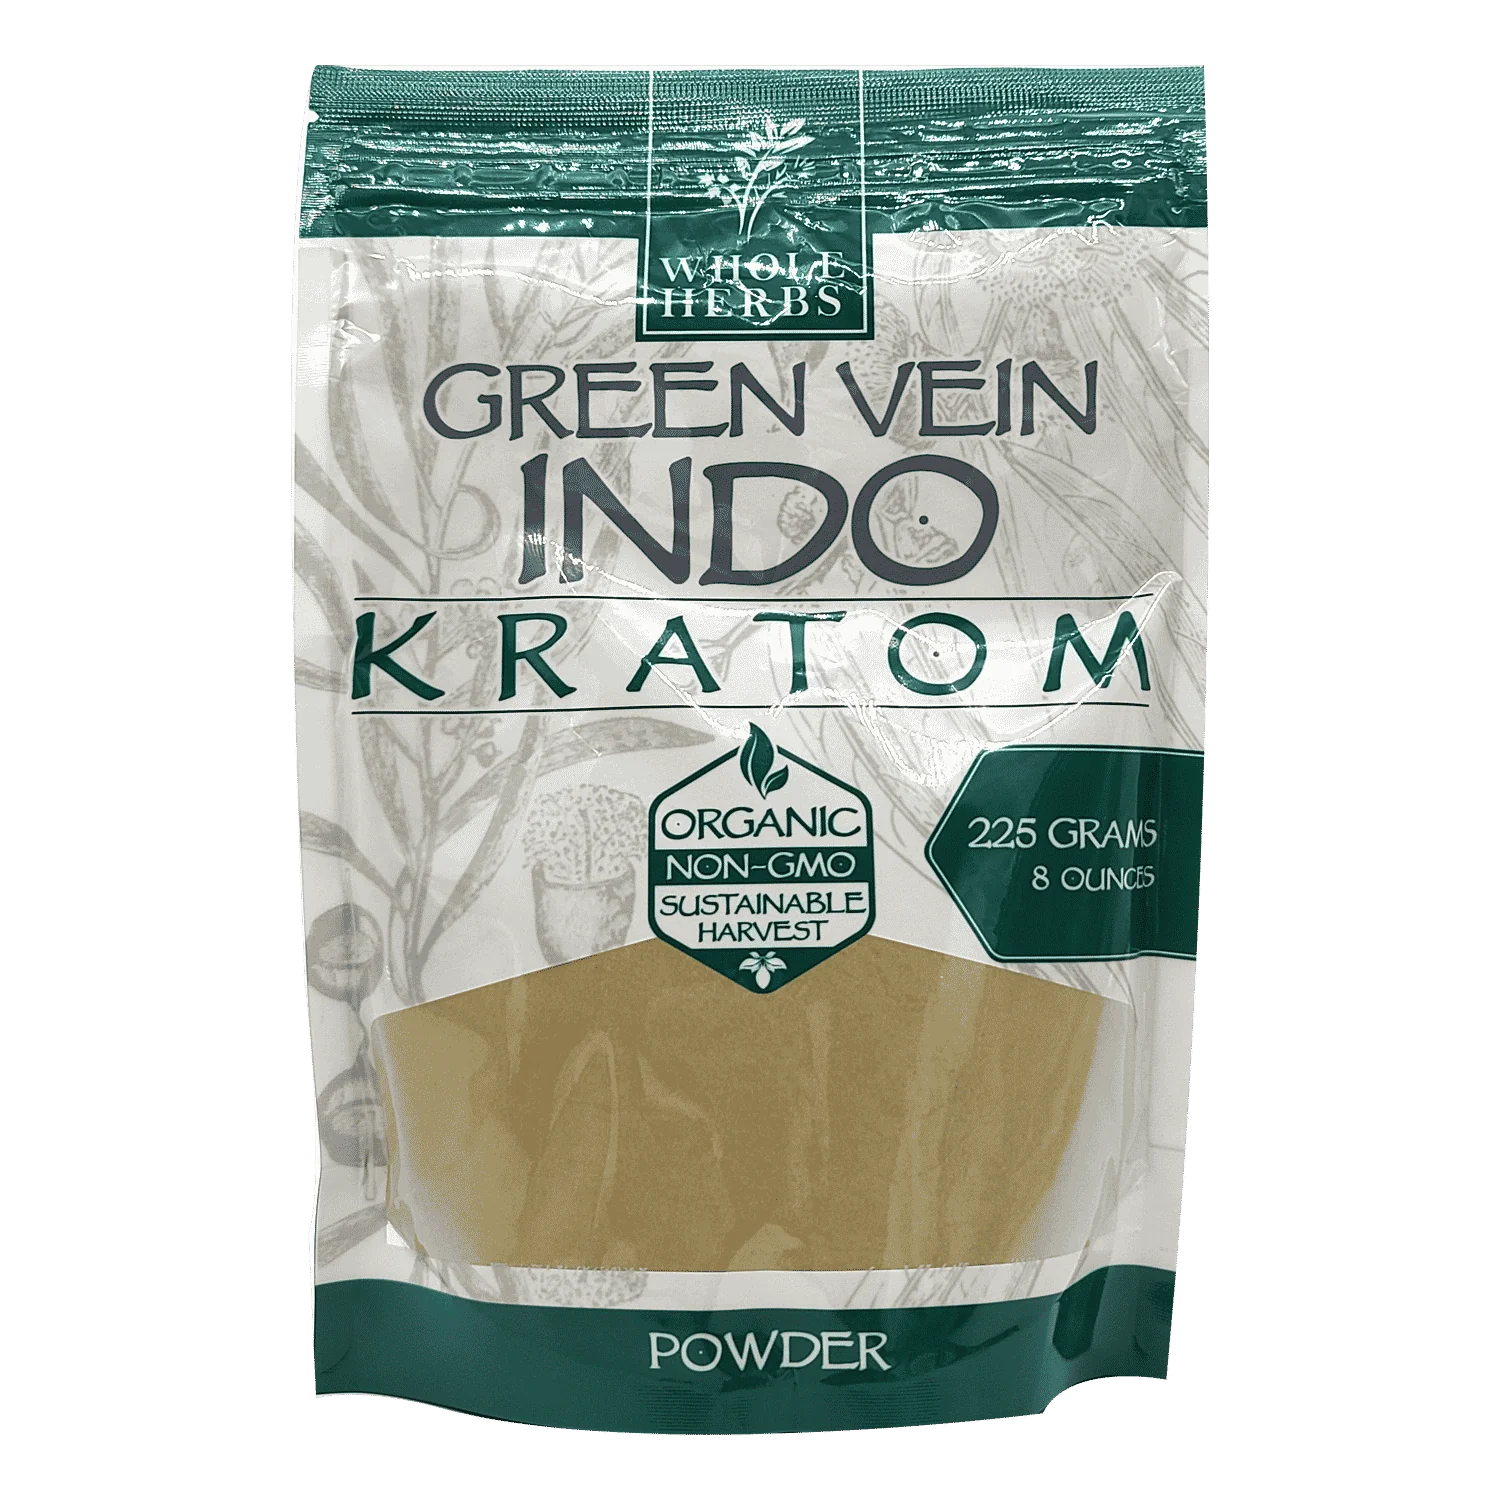 Whole Herbs Powder Kratom Whole Herbs Green Vein Indo 3.5 Ounces 